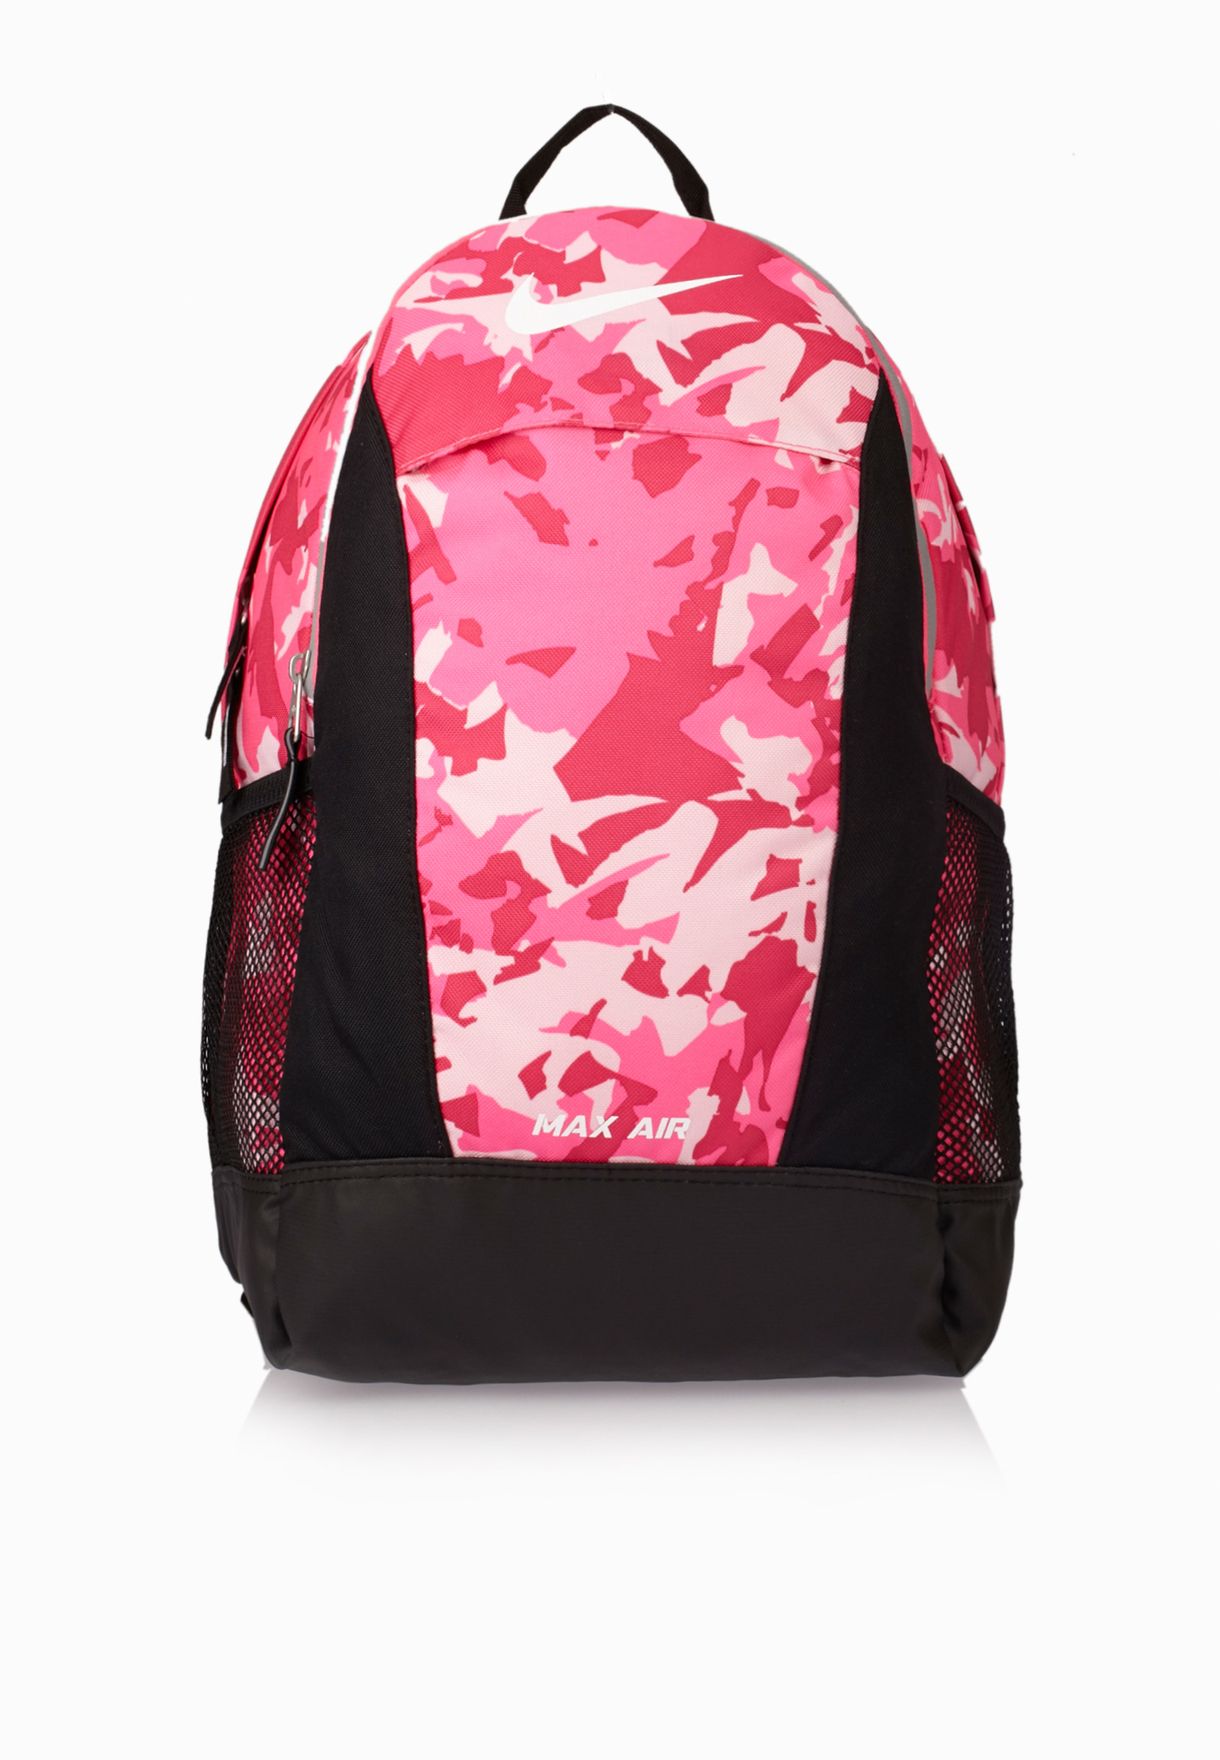 nike air pink backpack